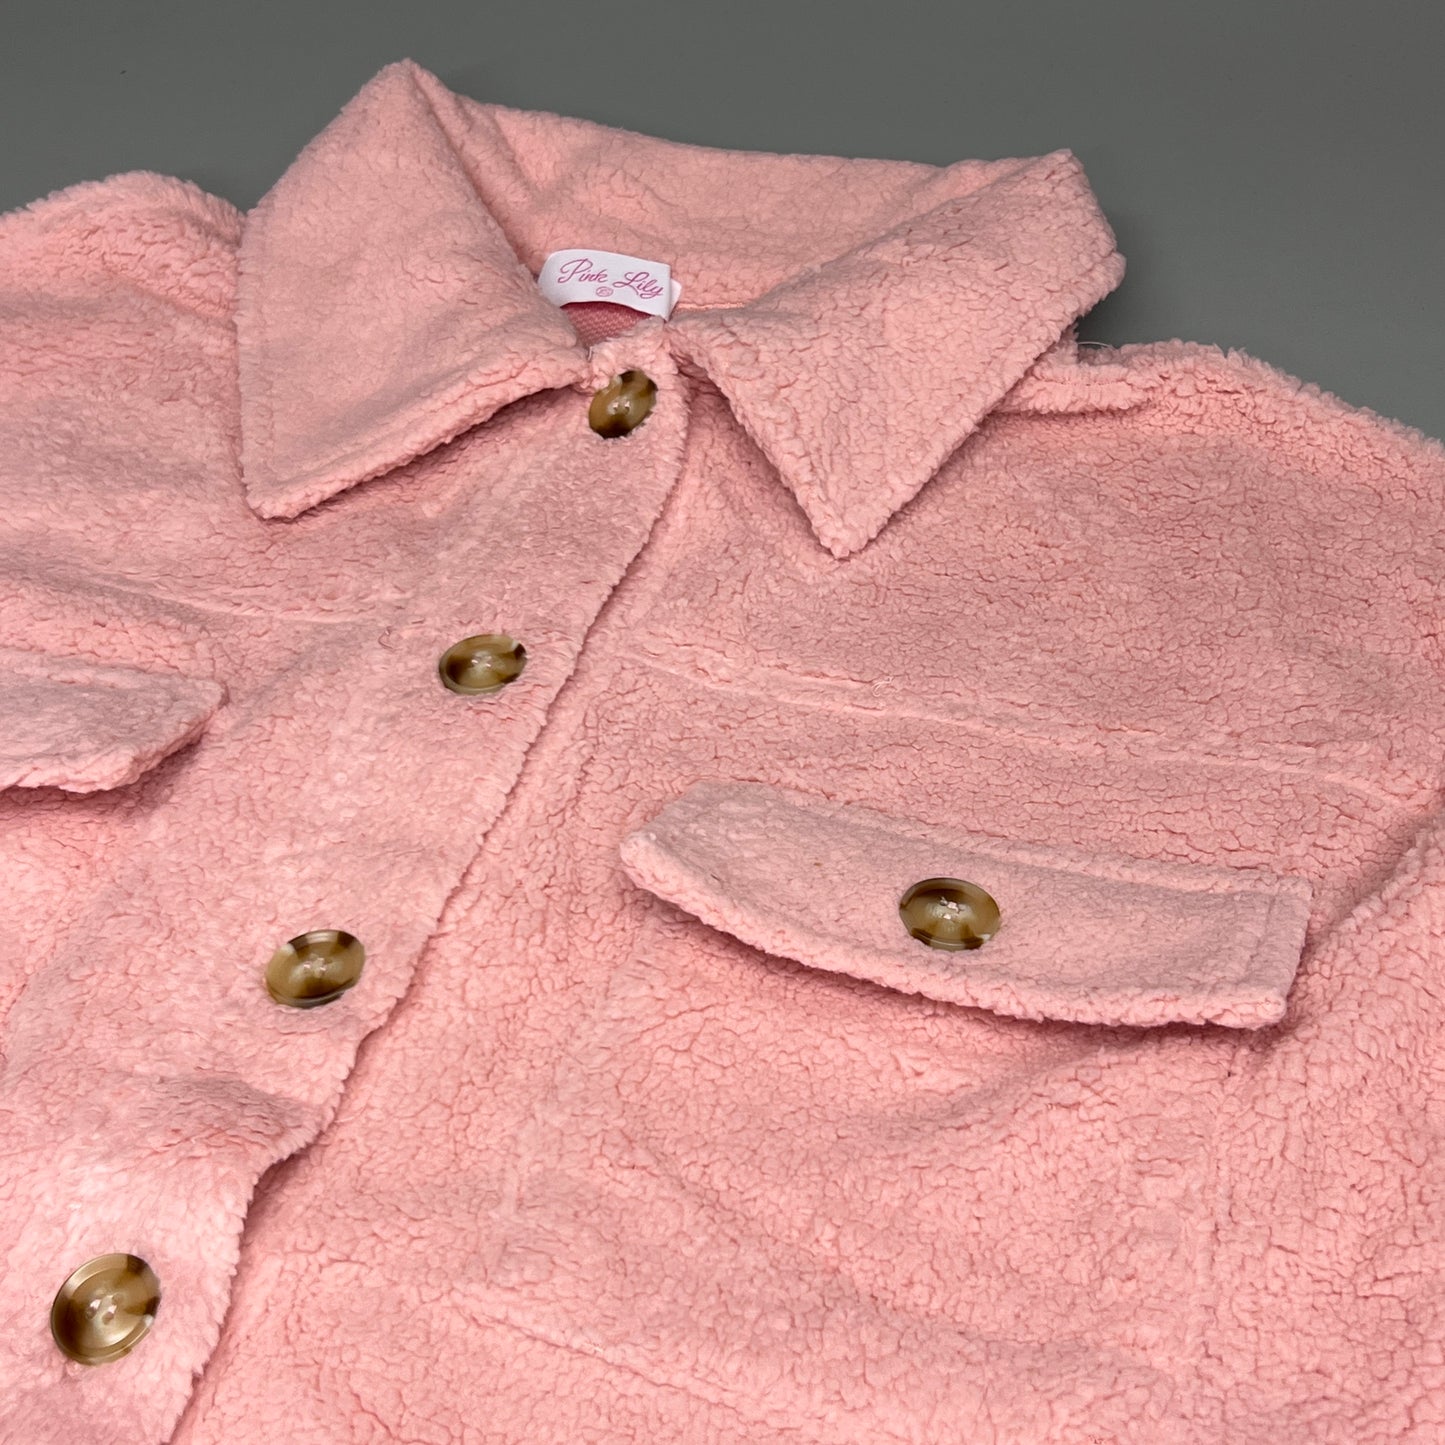 PINK LILY Fleece Button-up Jacket Women's Sz XS Mauve Pink PL177 (New)